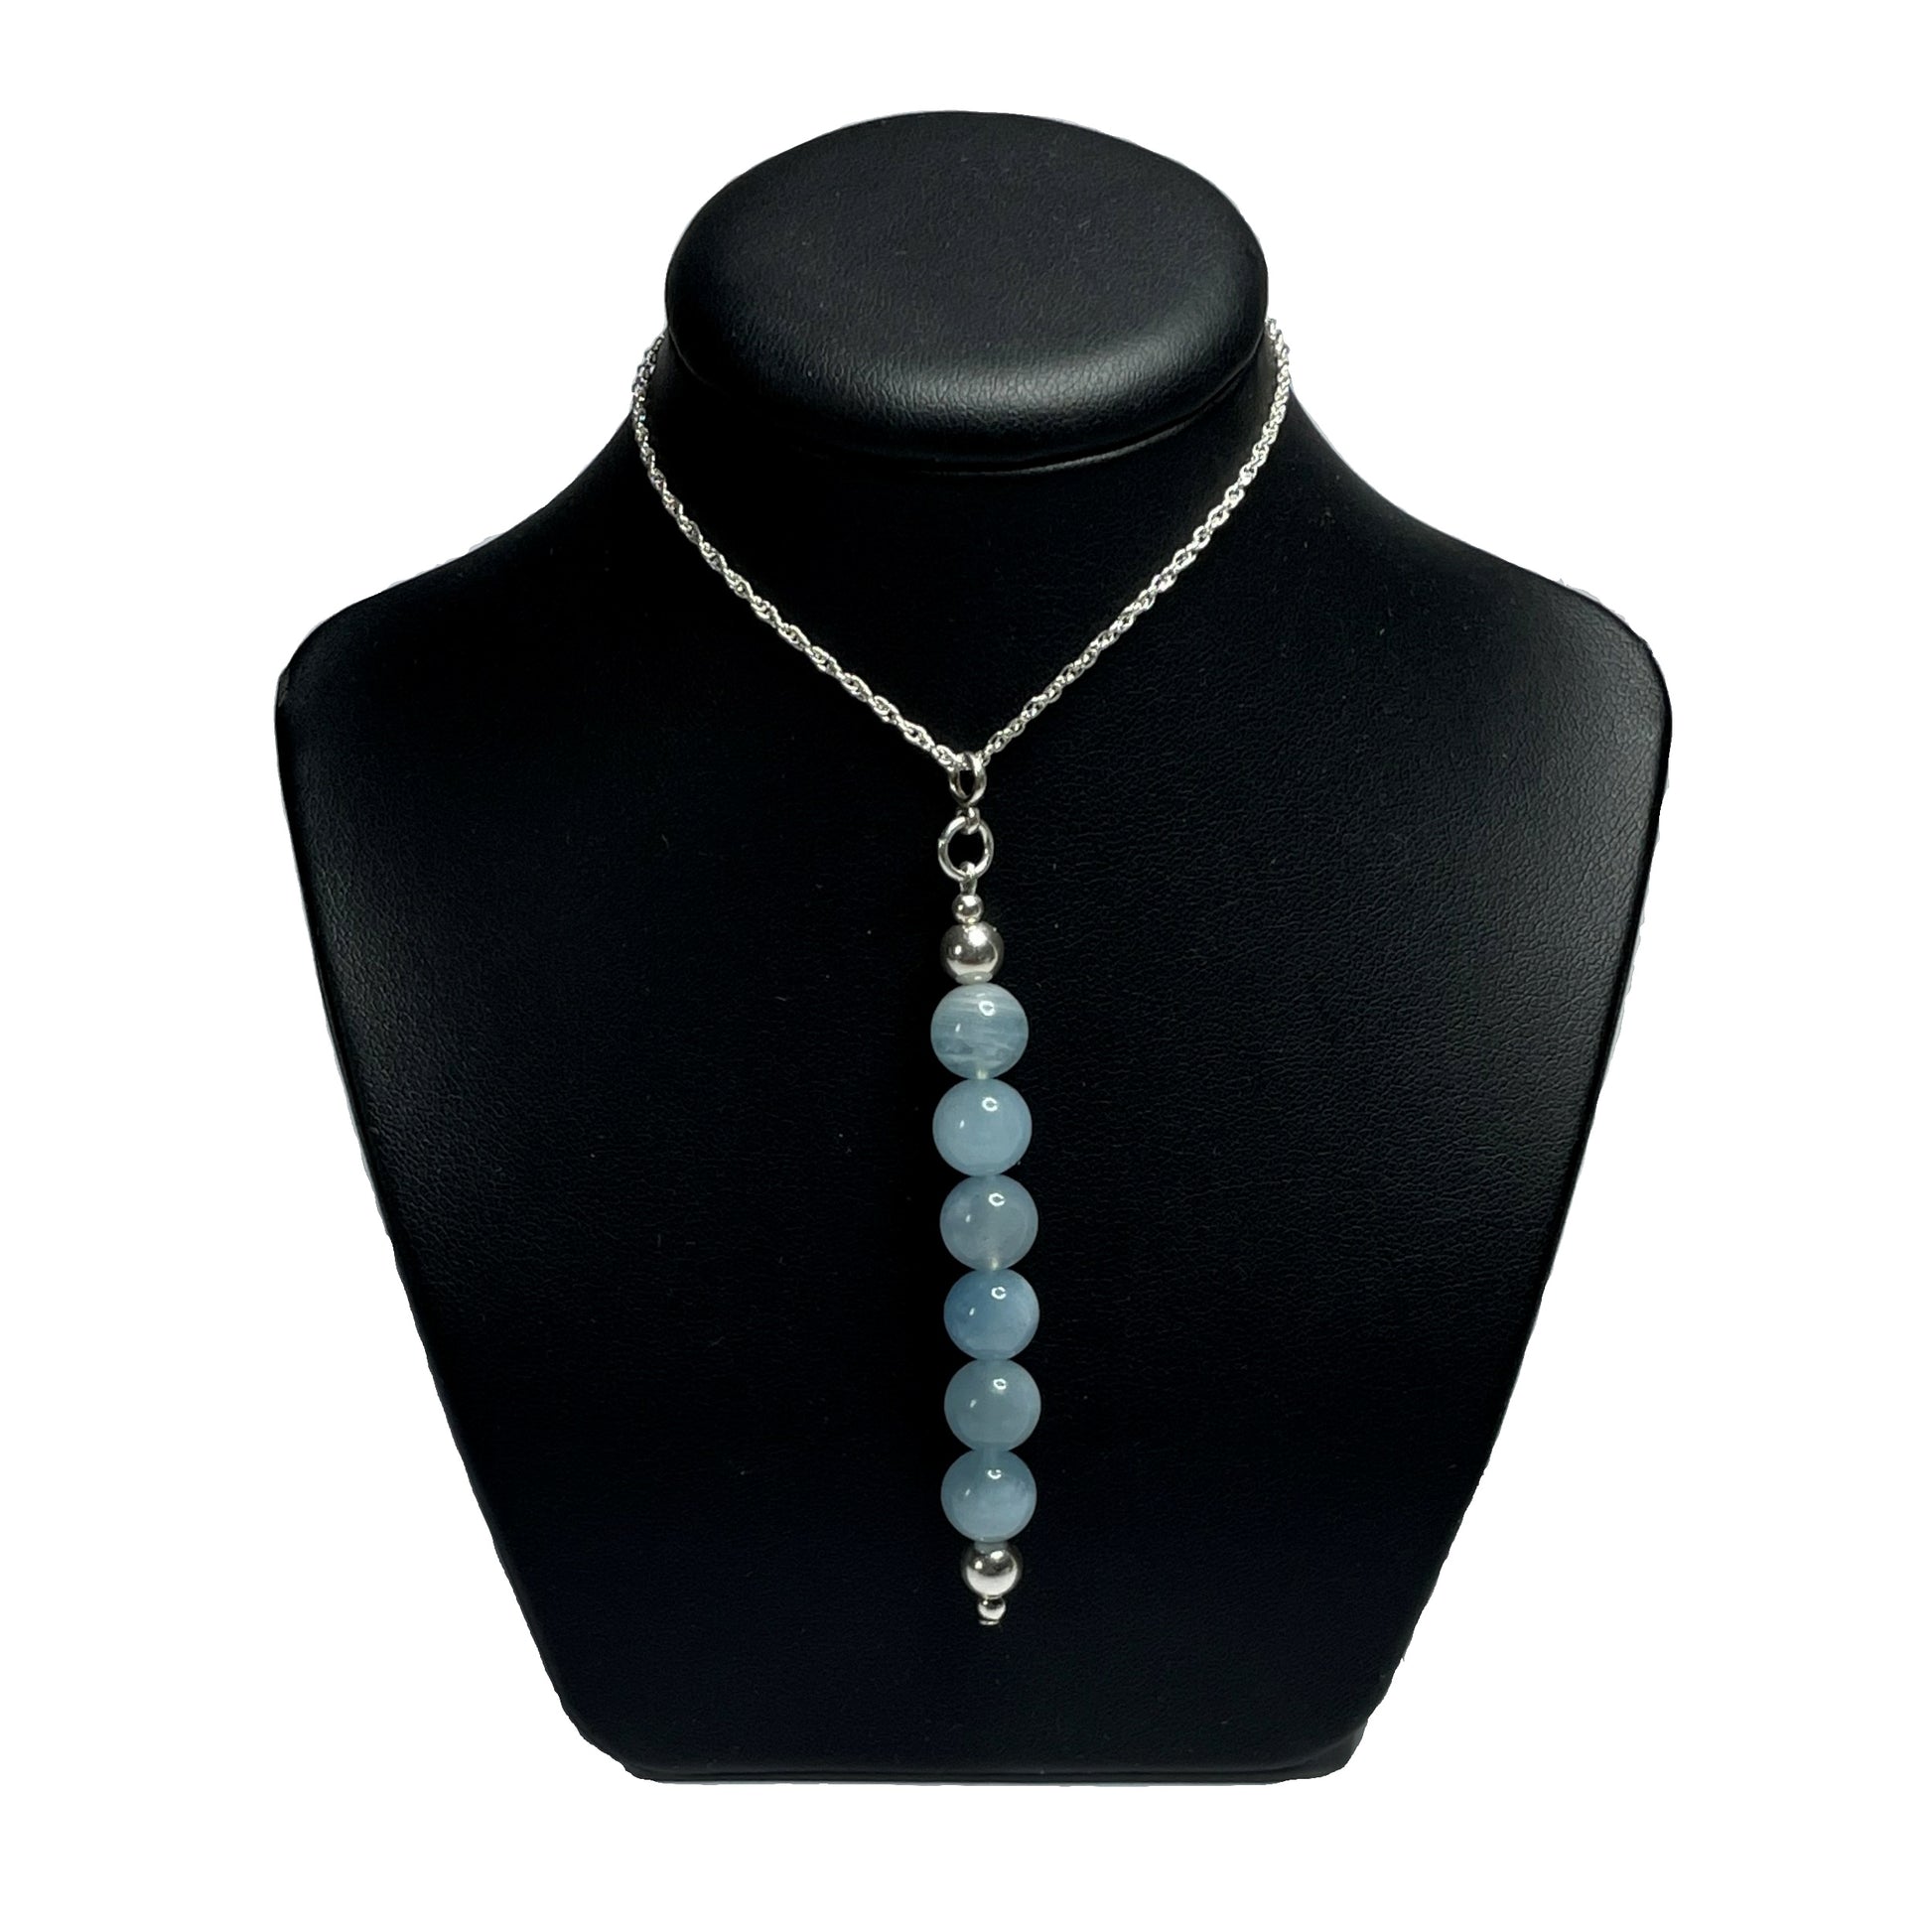 Aquamarine crystal pendant